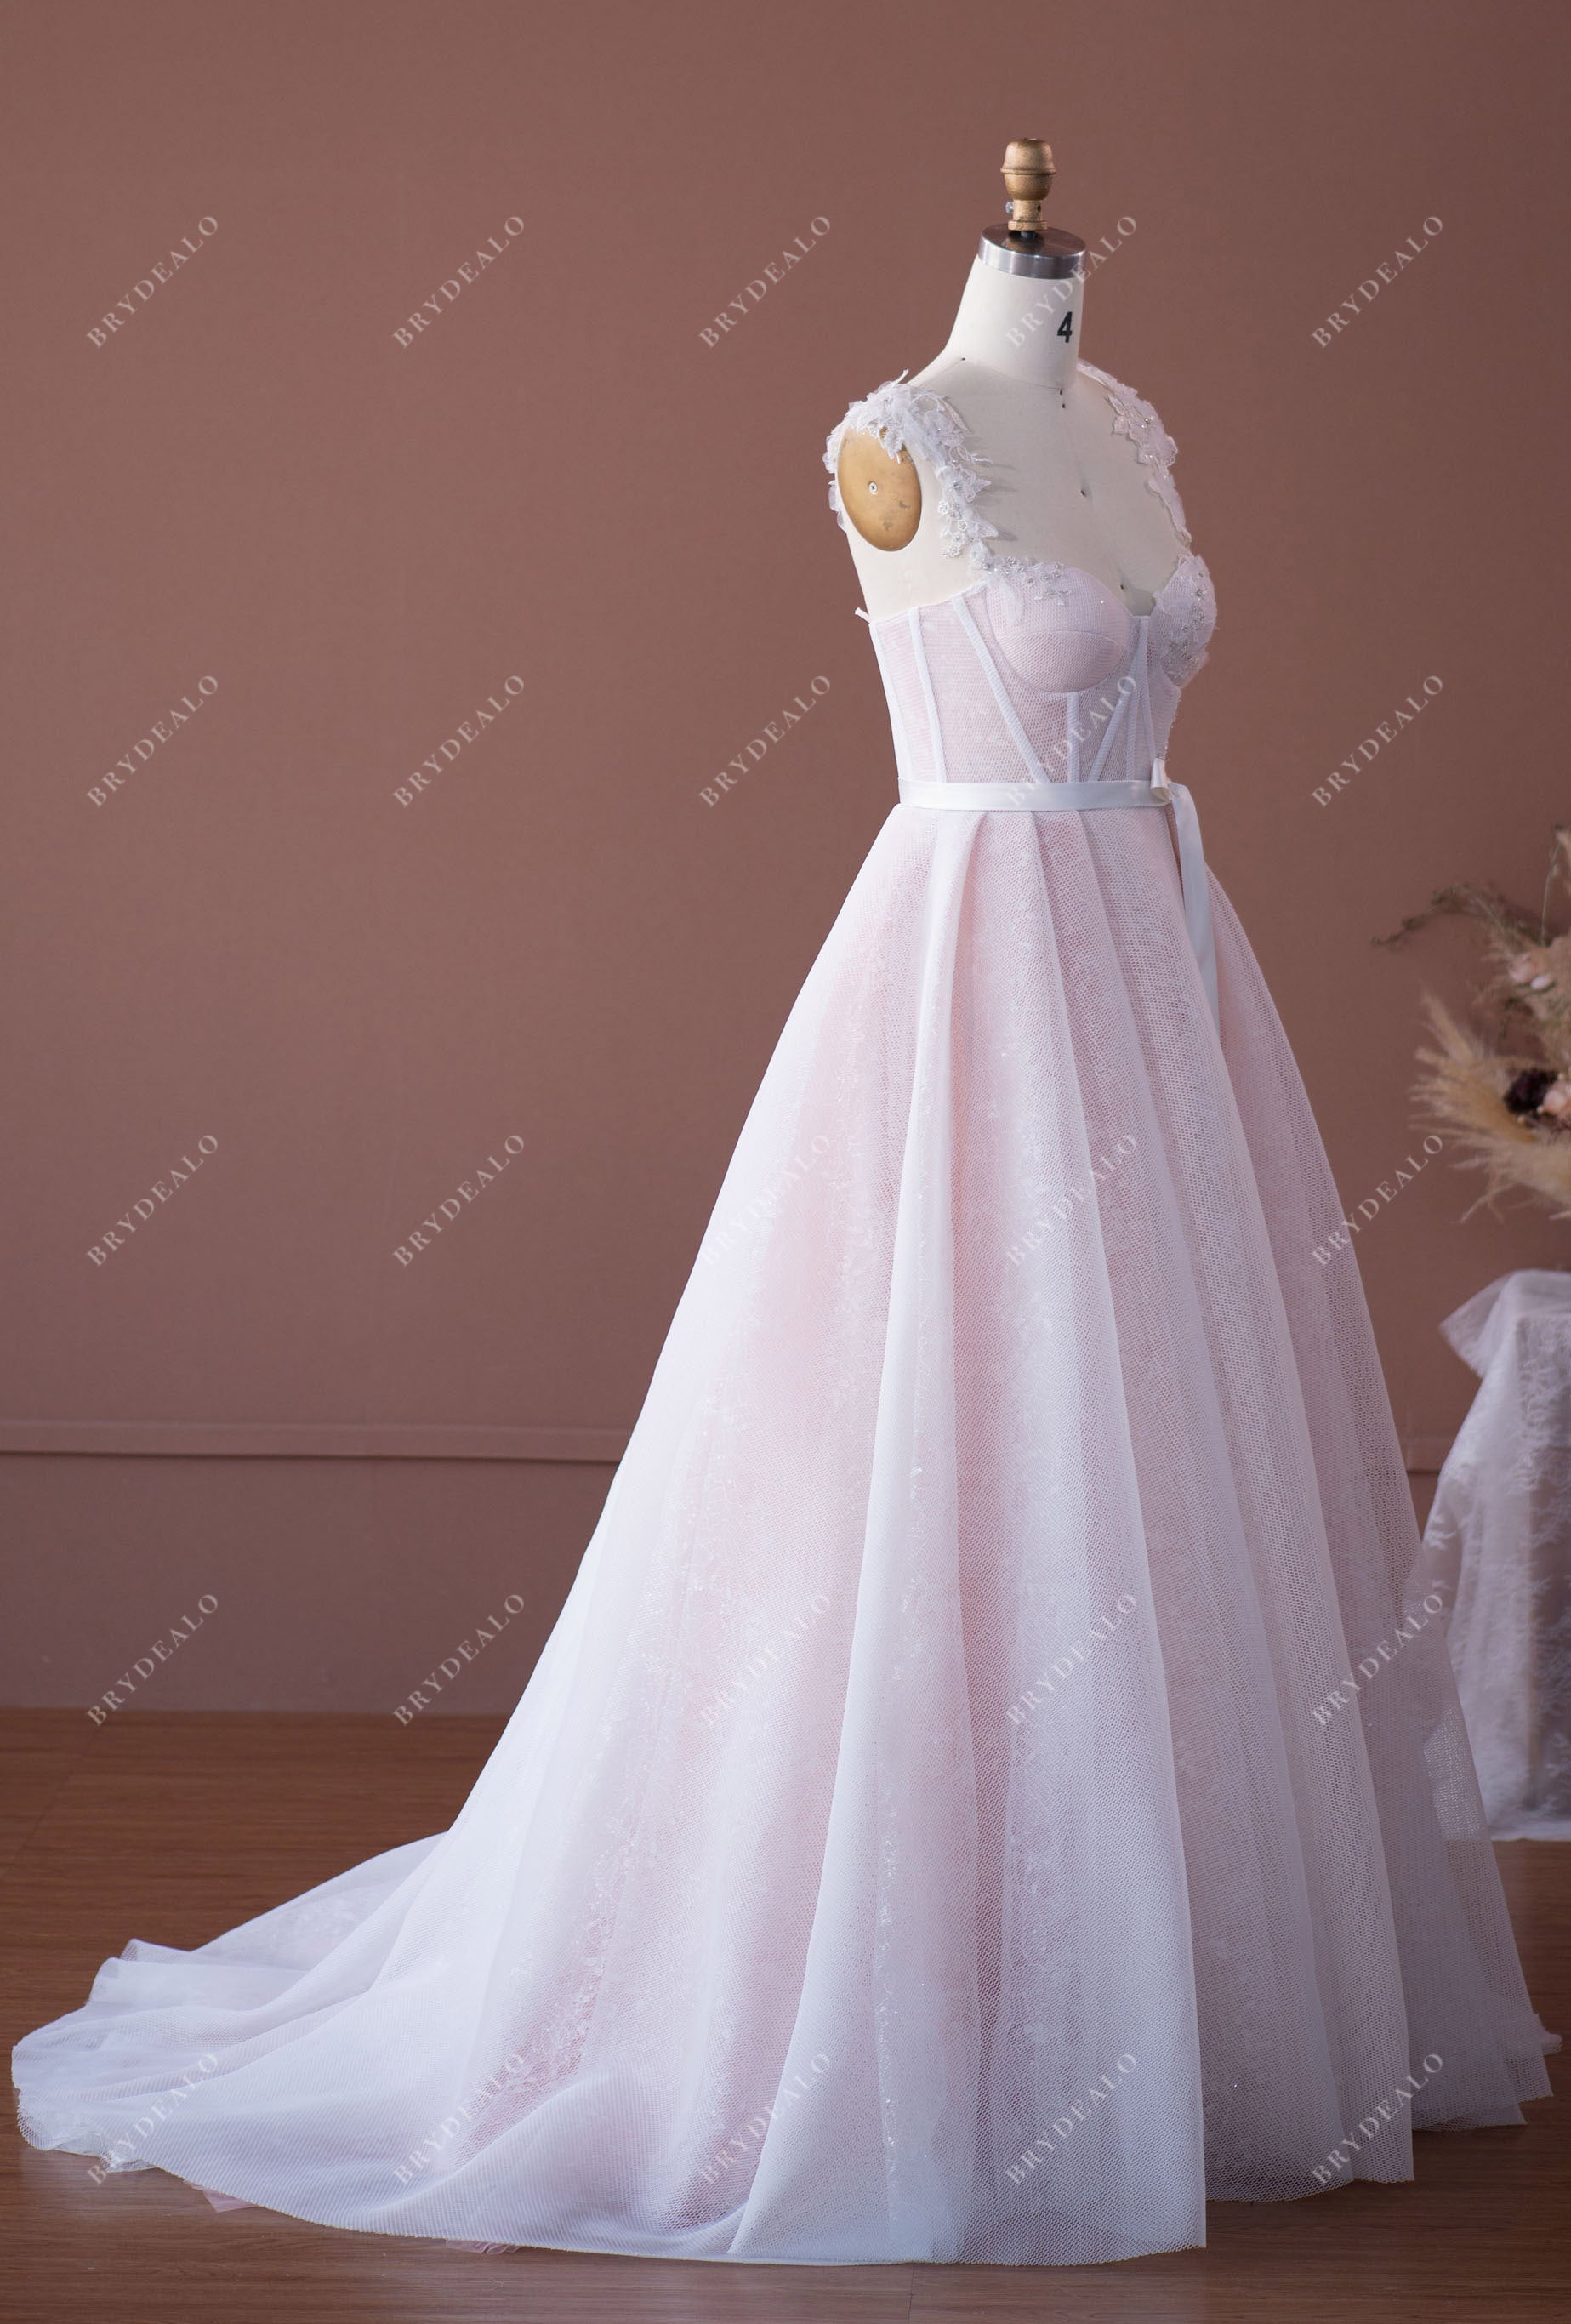 Wholesale Sweetheart Neck Pinkish Corset Floral Lace Net Wedding Dress